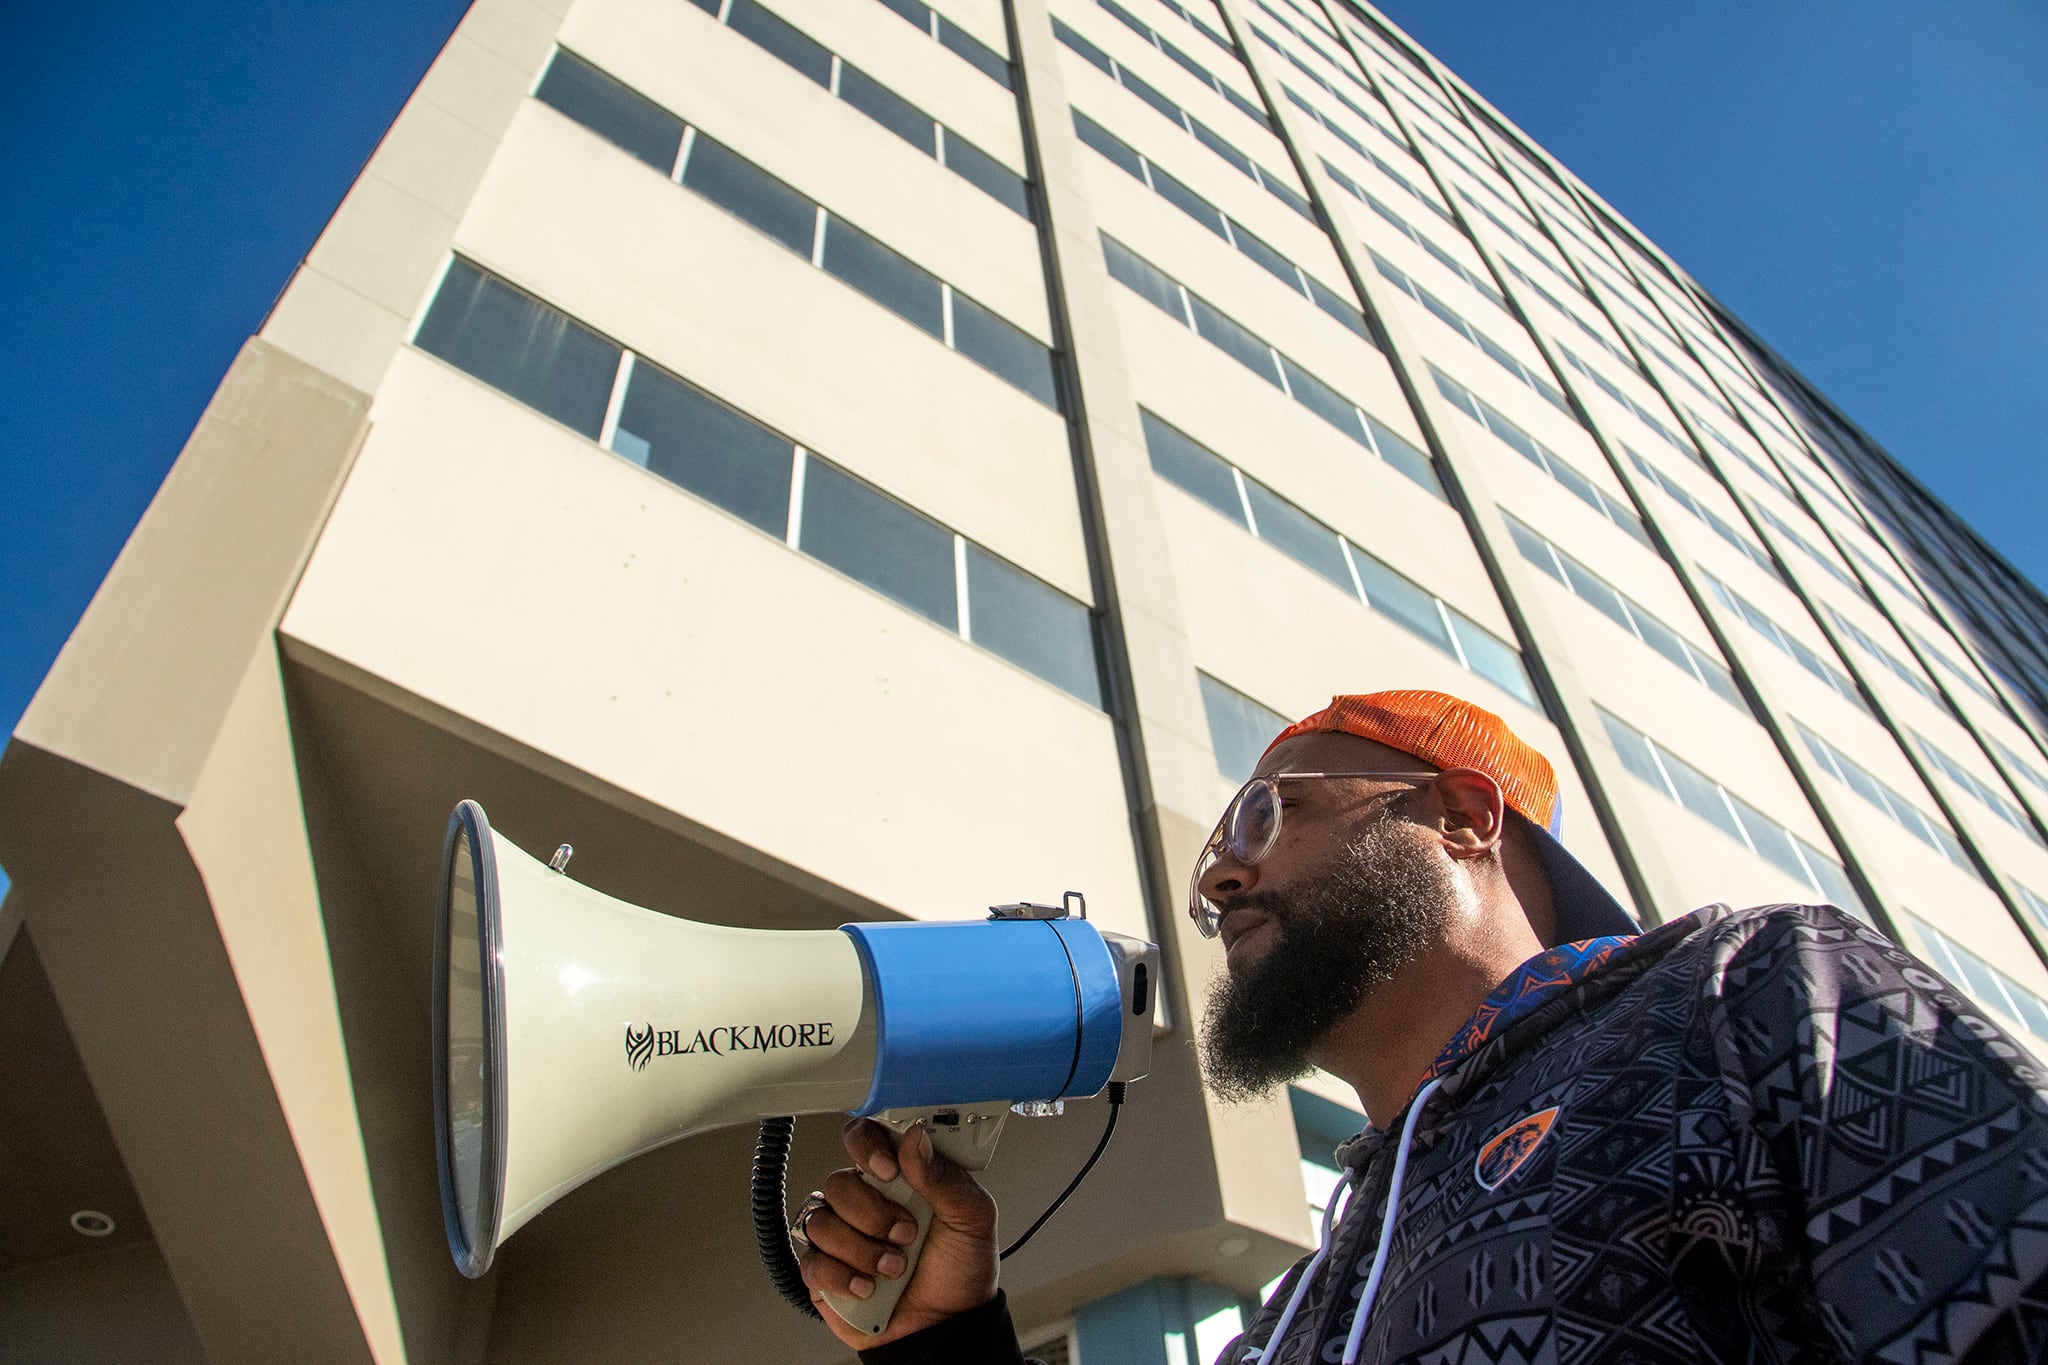 A man speaks into a bullhorn. A high-rise building looms behind him.